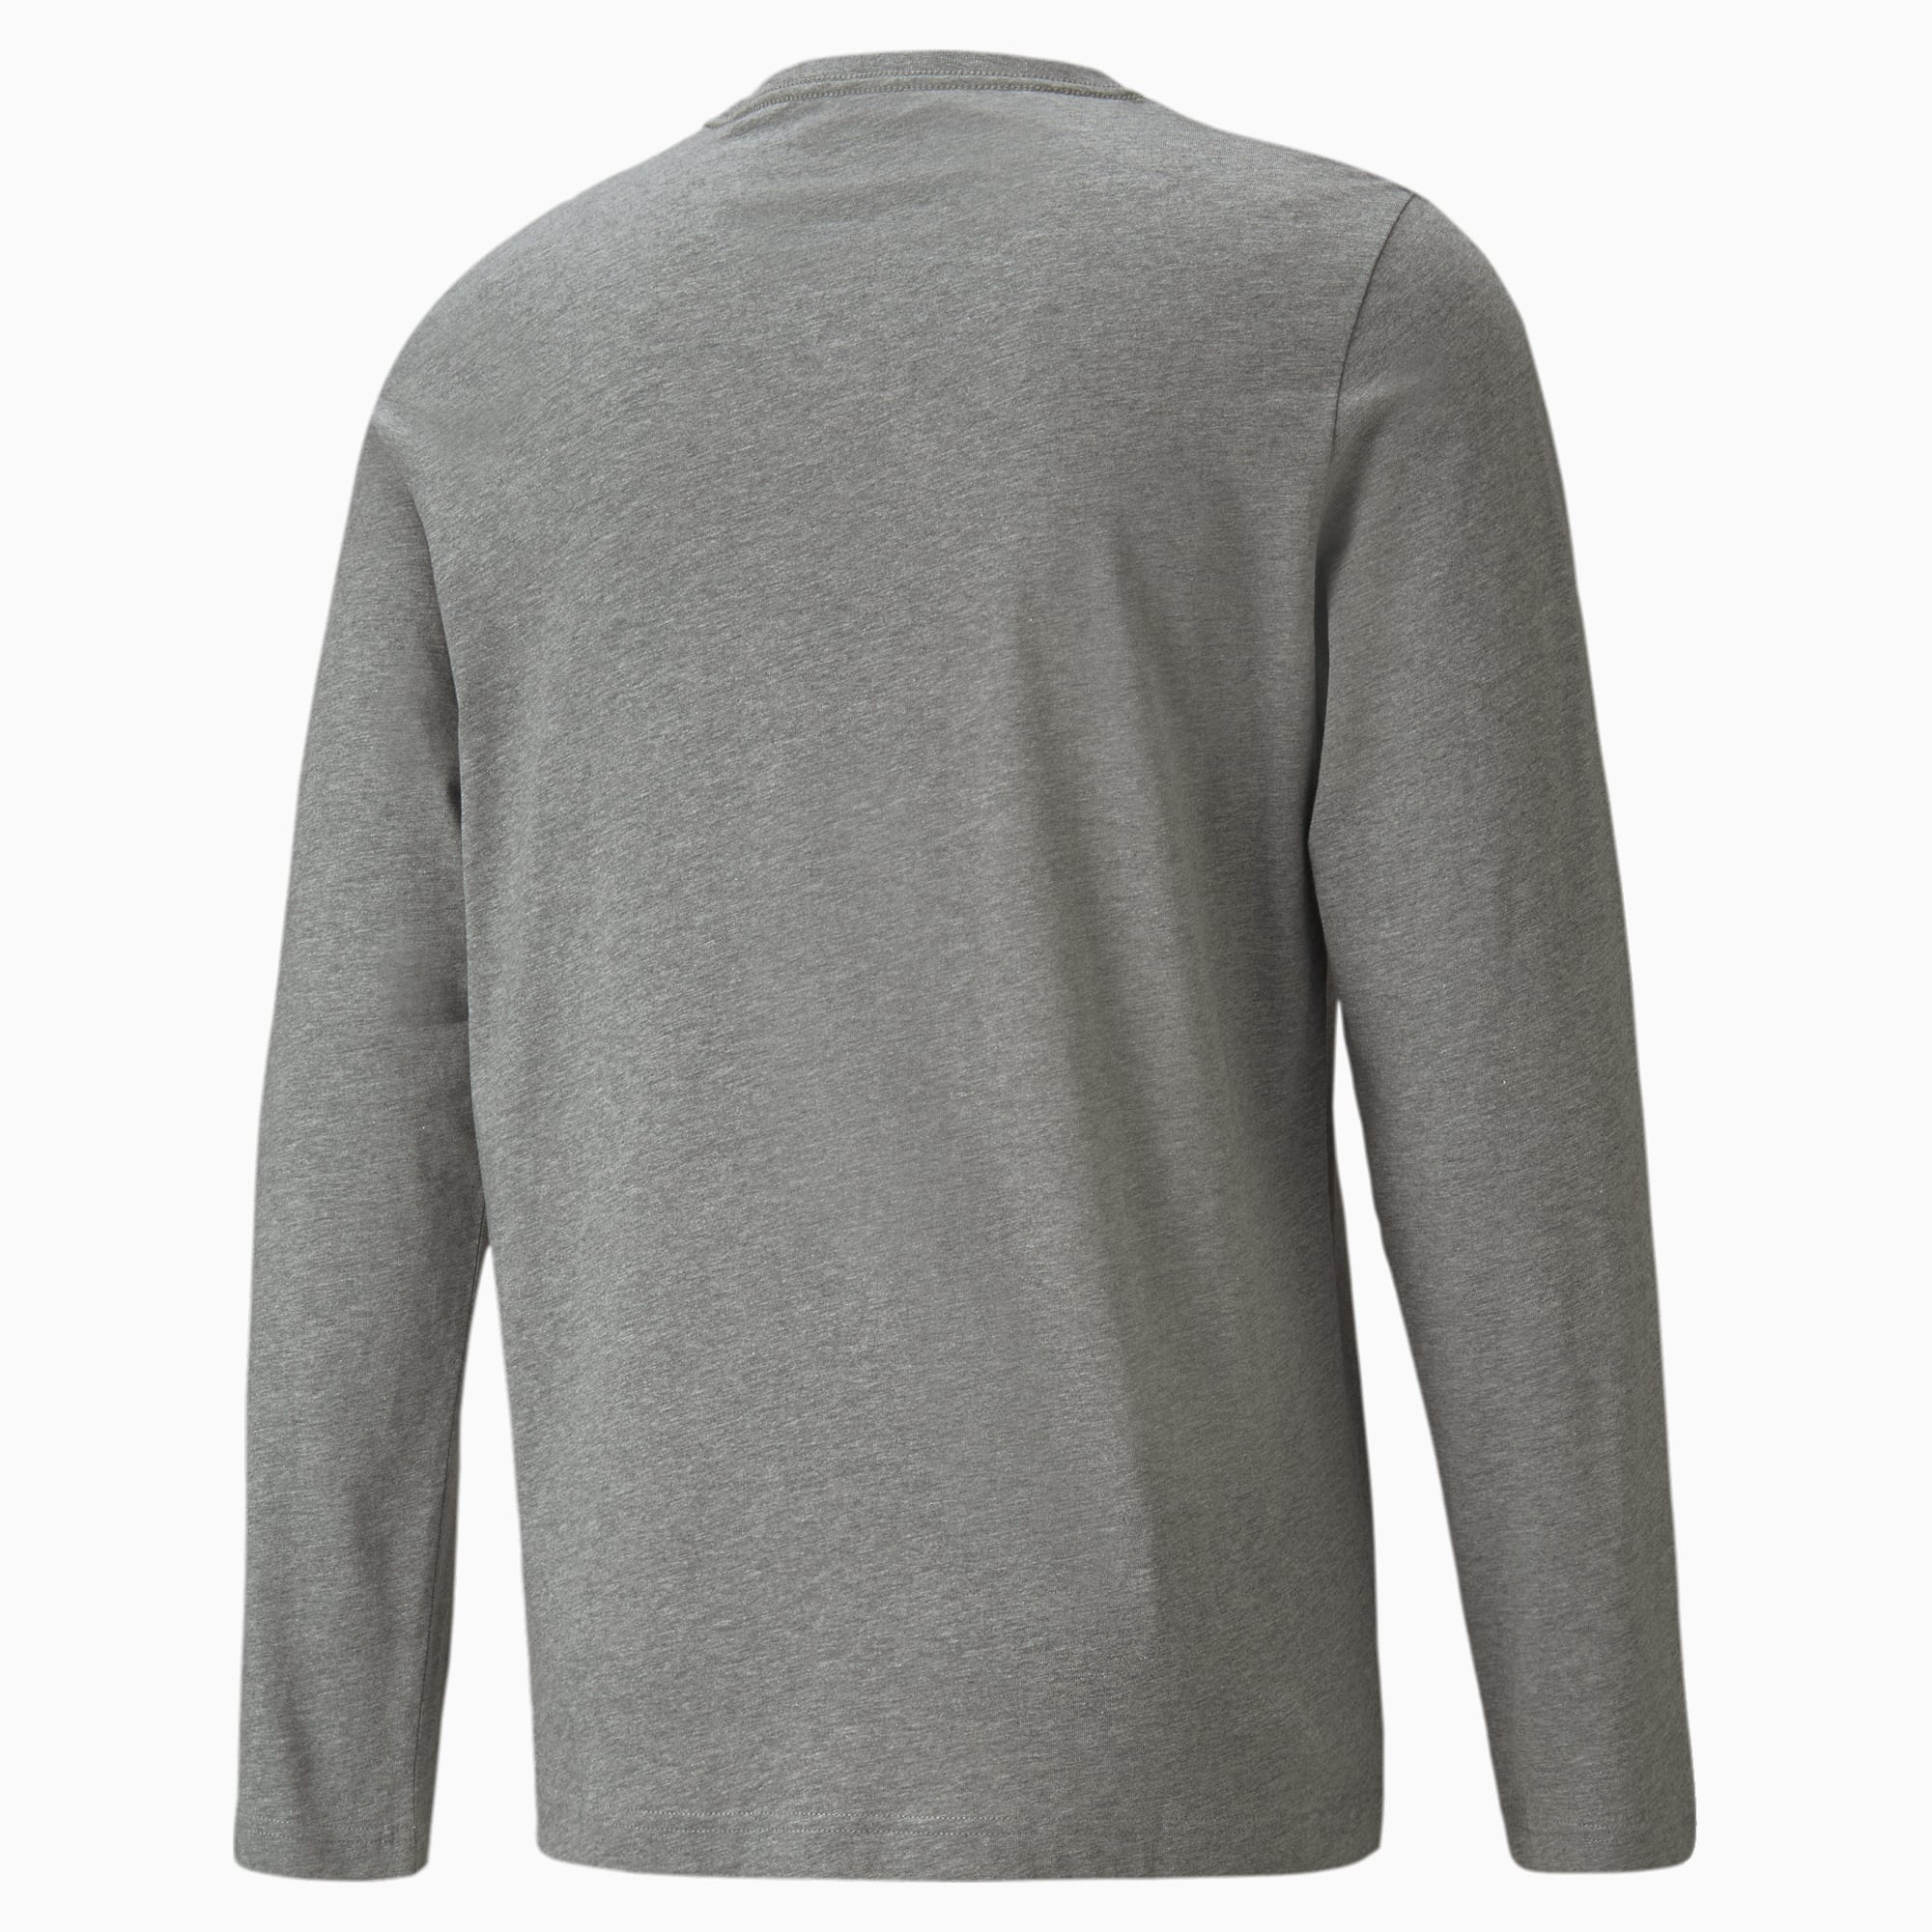 PUMA Essentials Long Sleeve Men's T-Shirt, Medium Grey Heather, Size XXS, Clothing